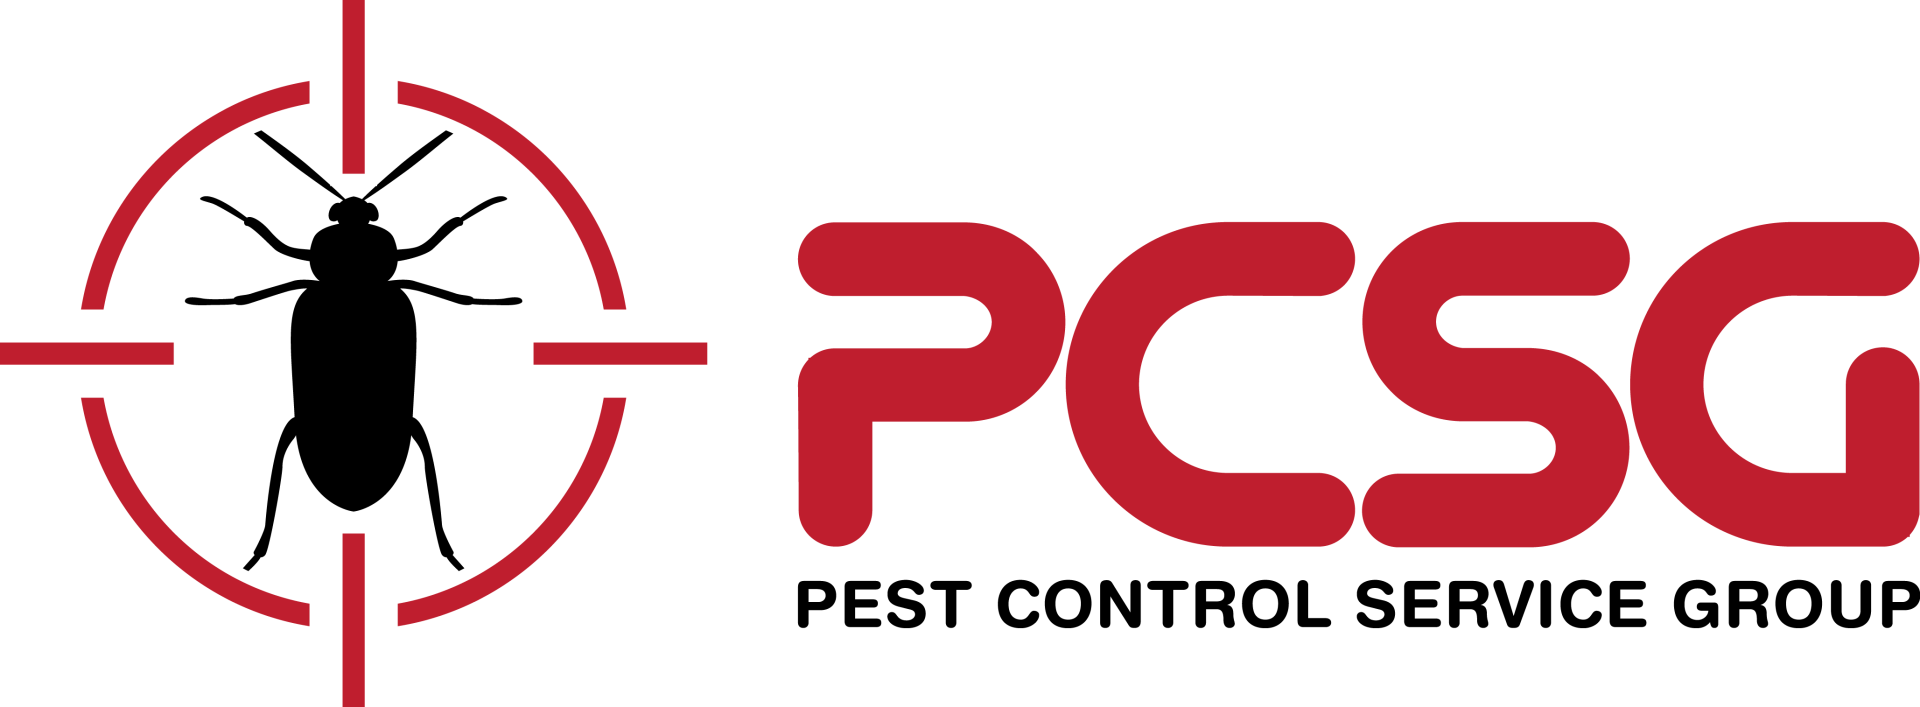 Pest Control Service Group